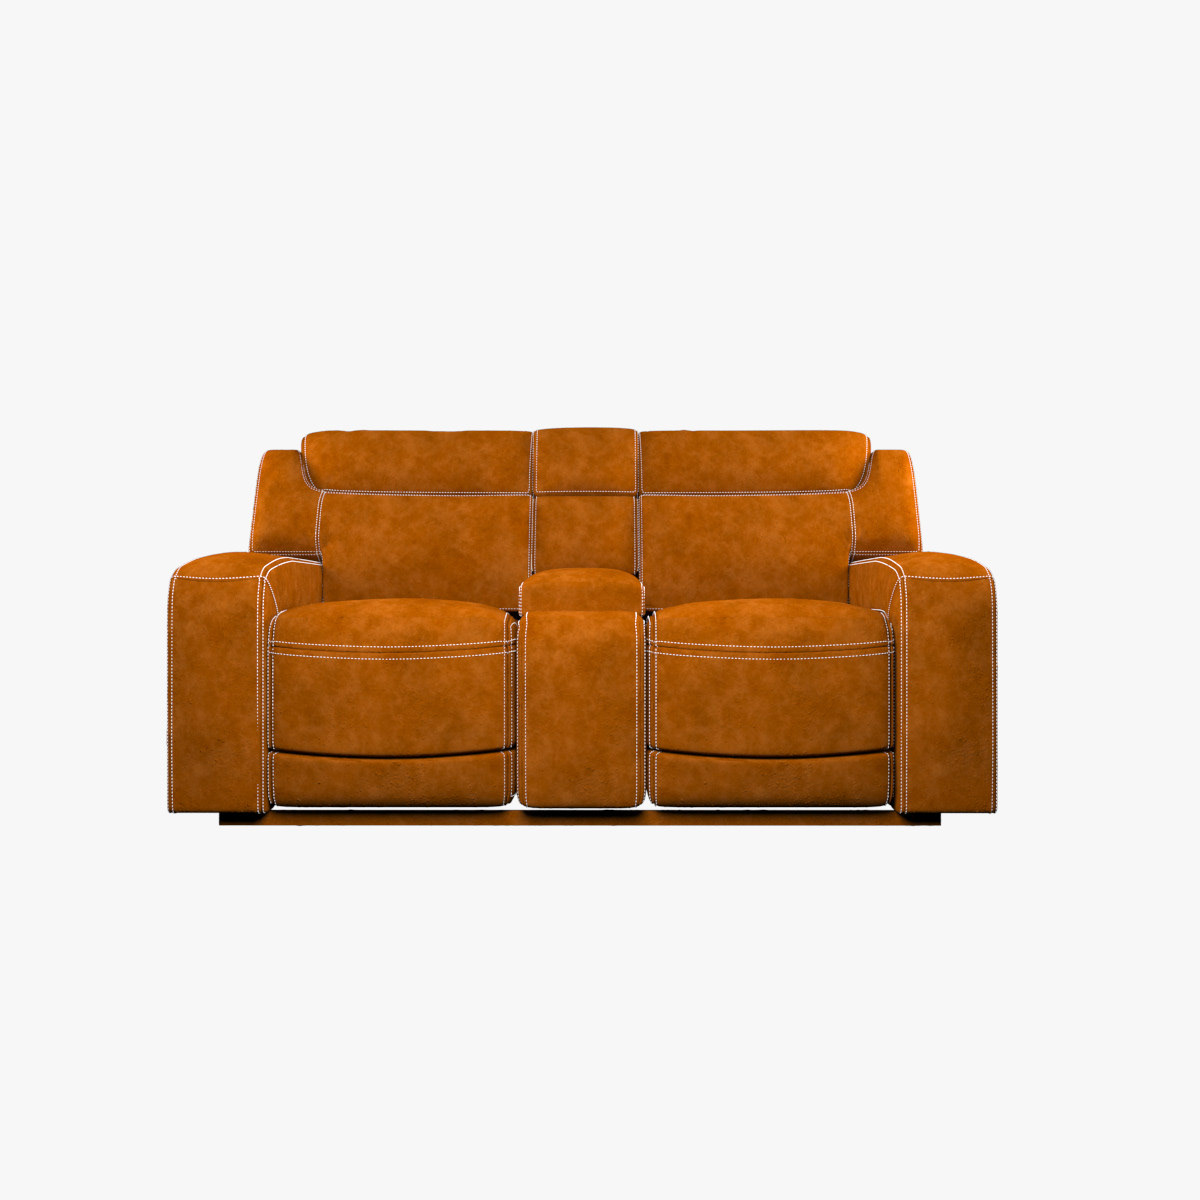 3D 3ds max architecture furniture interior design  living room loveseat modern sofa visualization